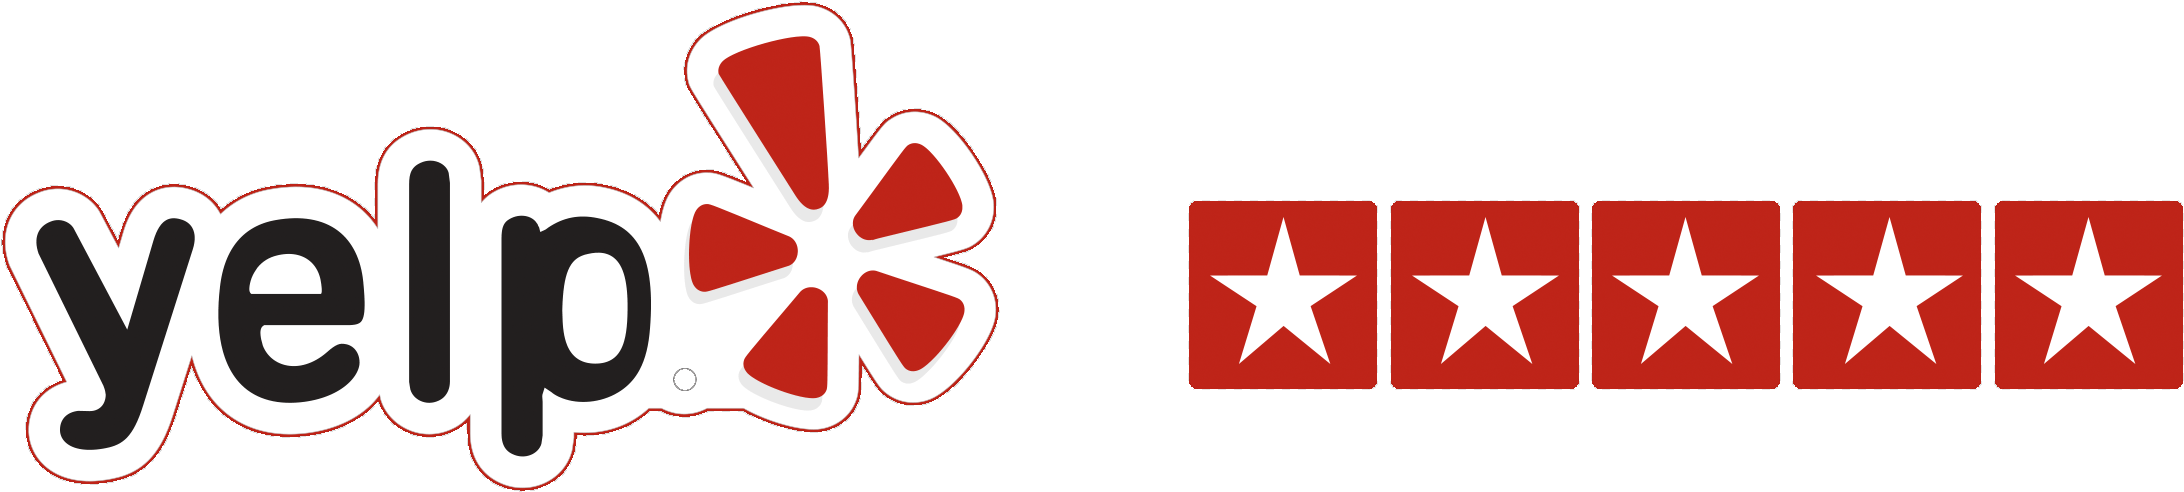 Yelp Reviews - 5 Star Yelp Logo (2300x491)